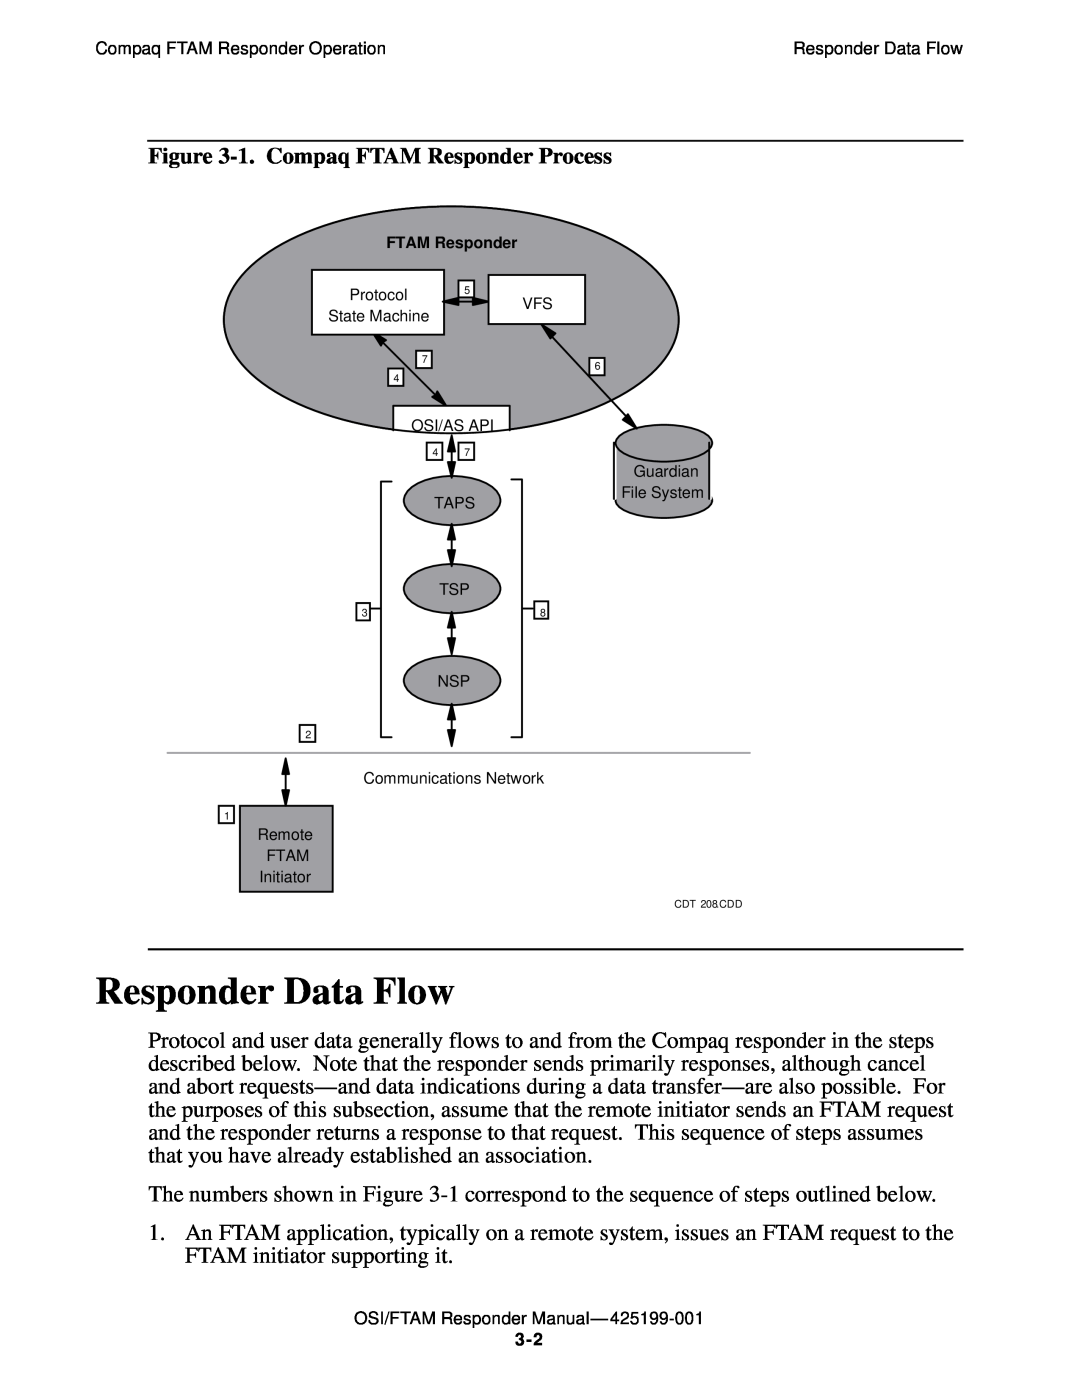 Compaq OSI/APLMGR D43, OSI/FTAM D43 manual Responder Data Flow, 1. Compaq FTAM Responder Process 